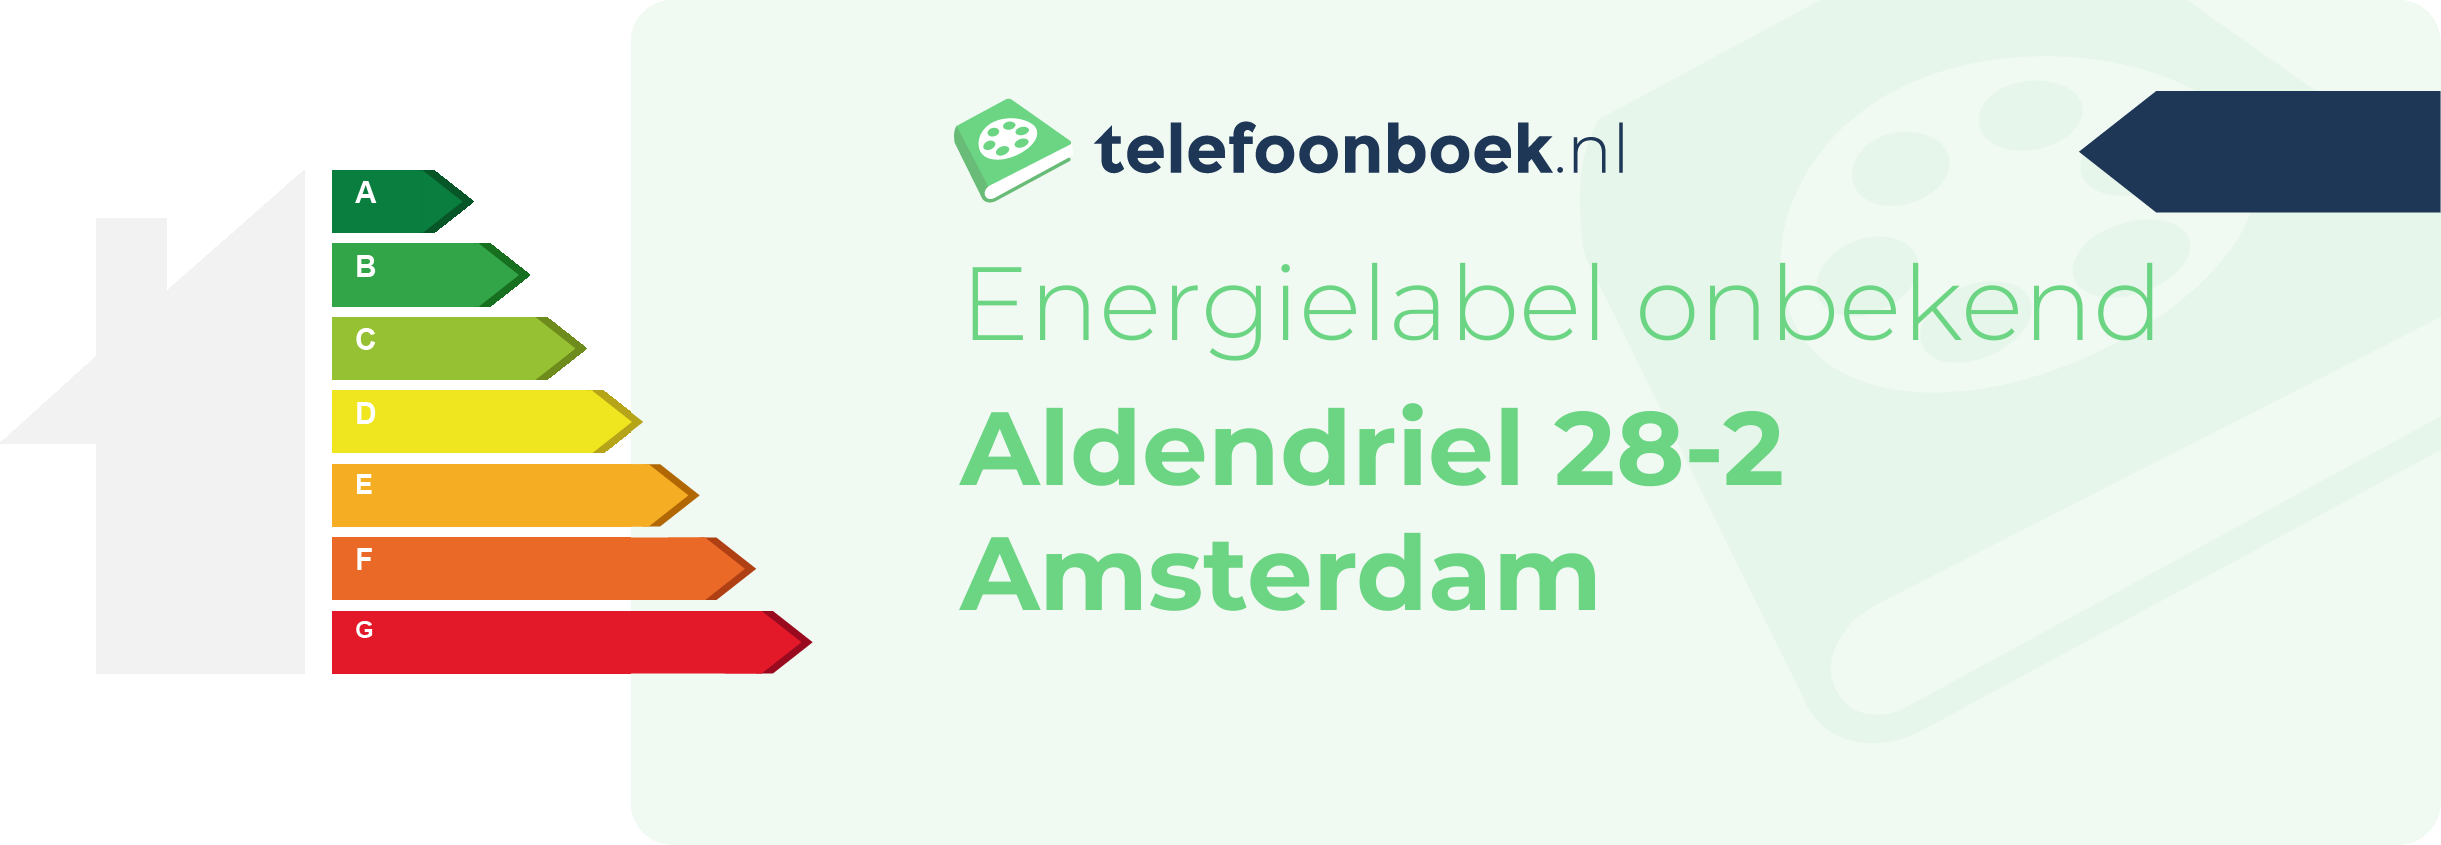 Energielabel Aldendriel 28-2 Amsterdam